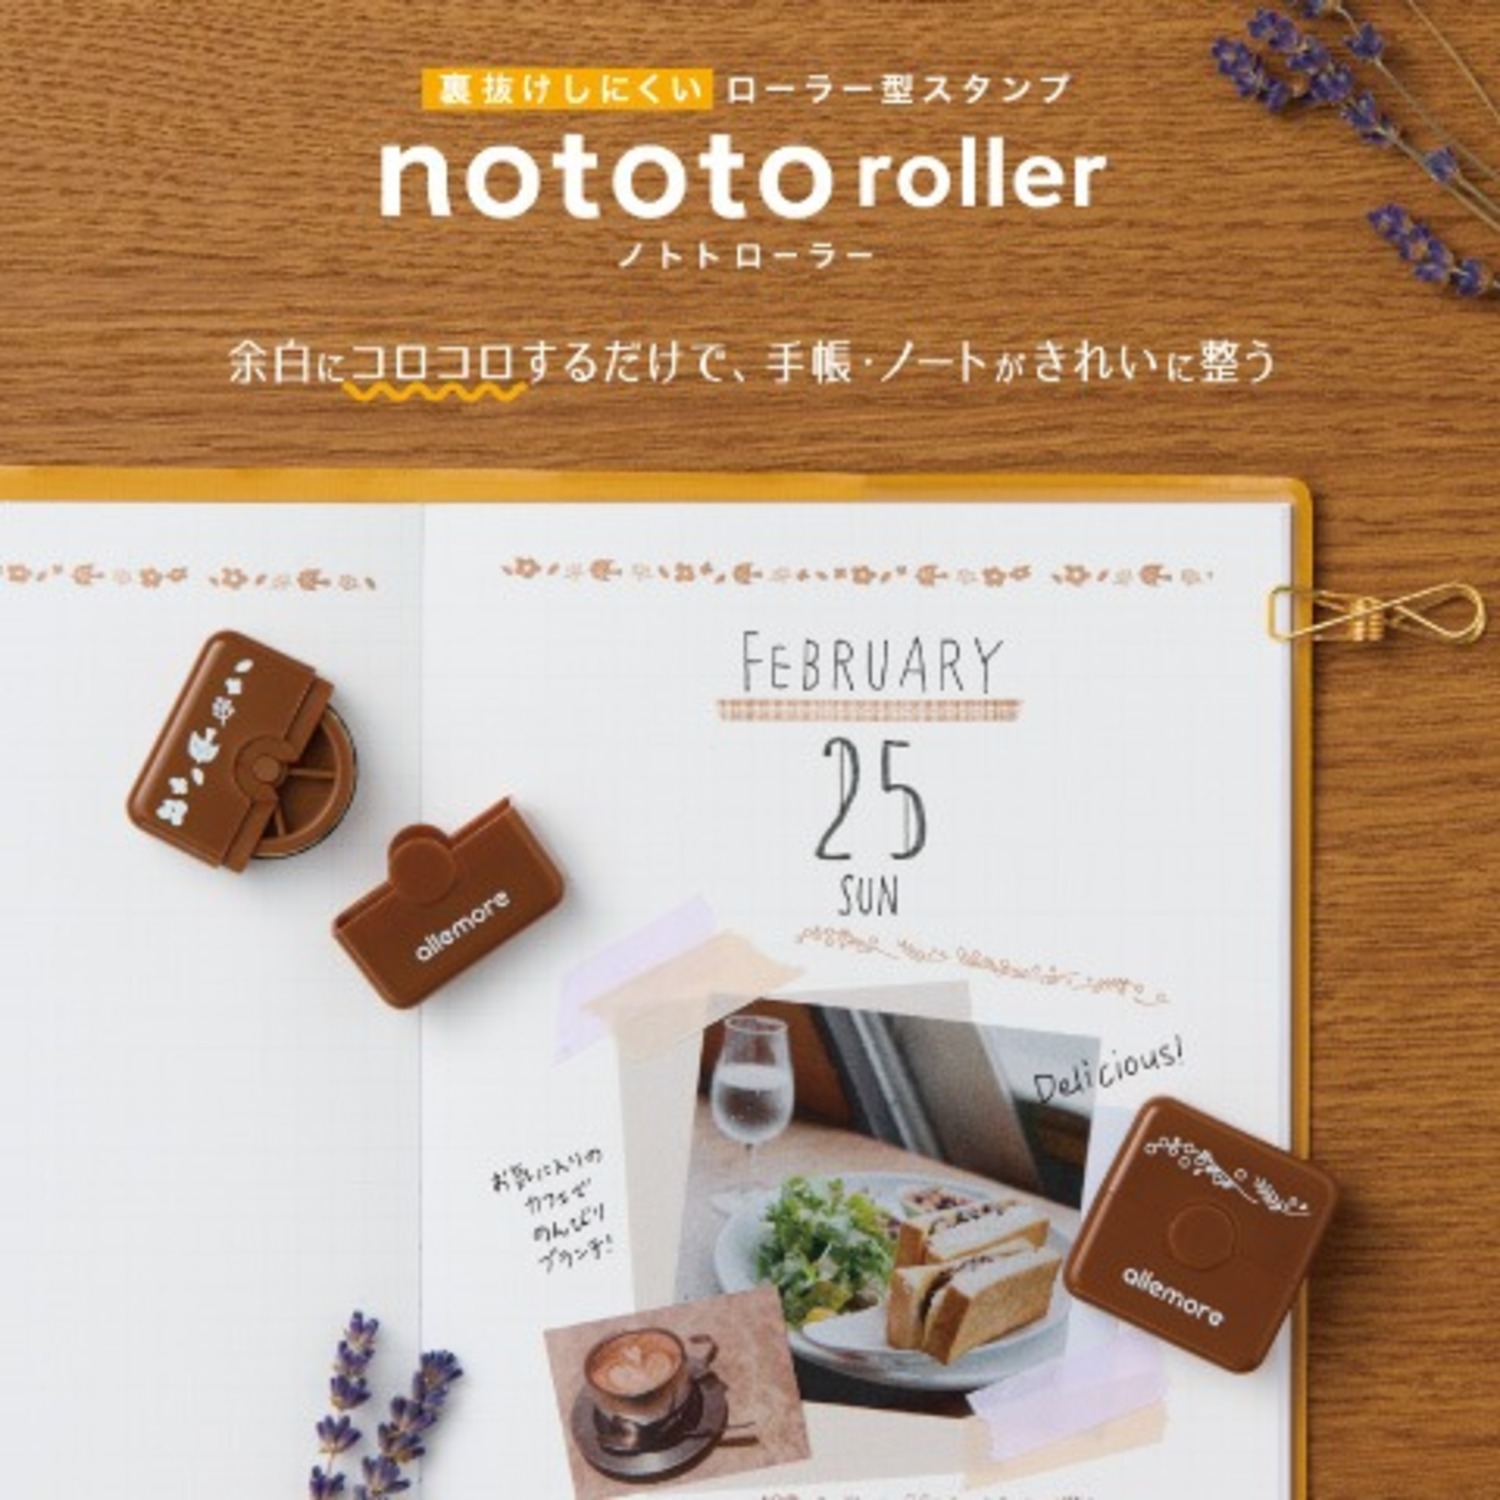 nototo roller （ ノトト ローラー ）